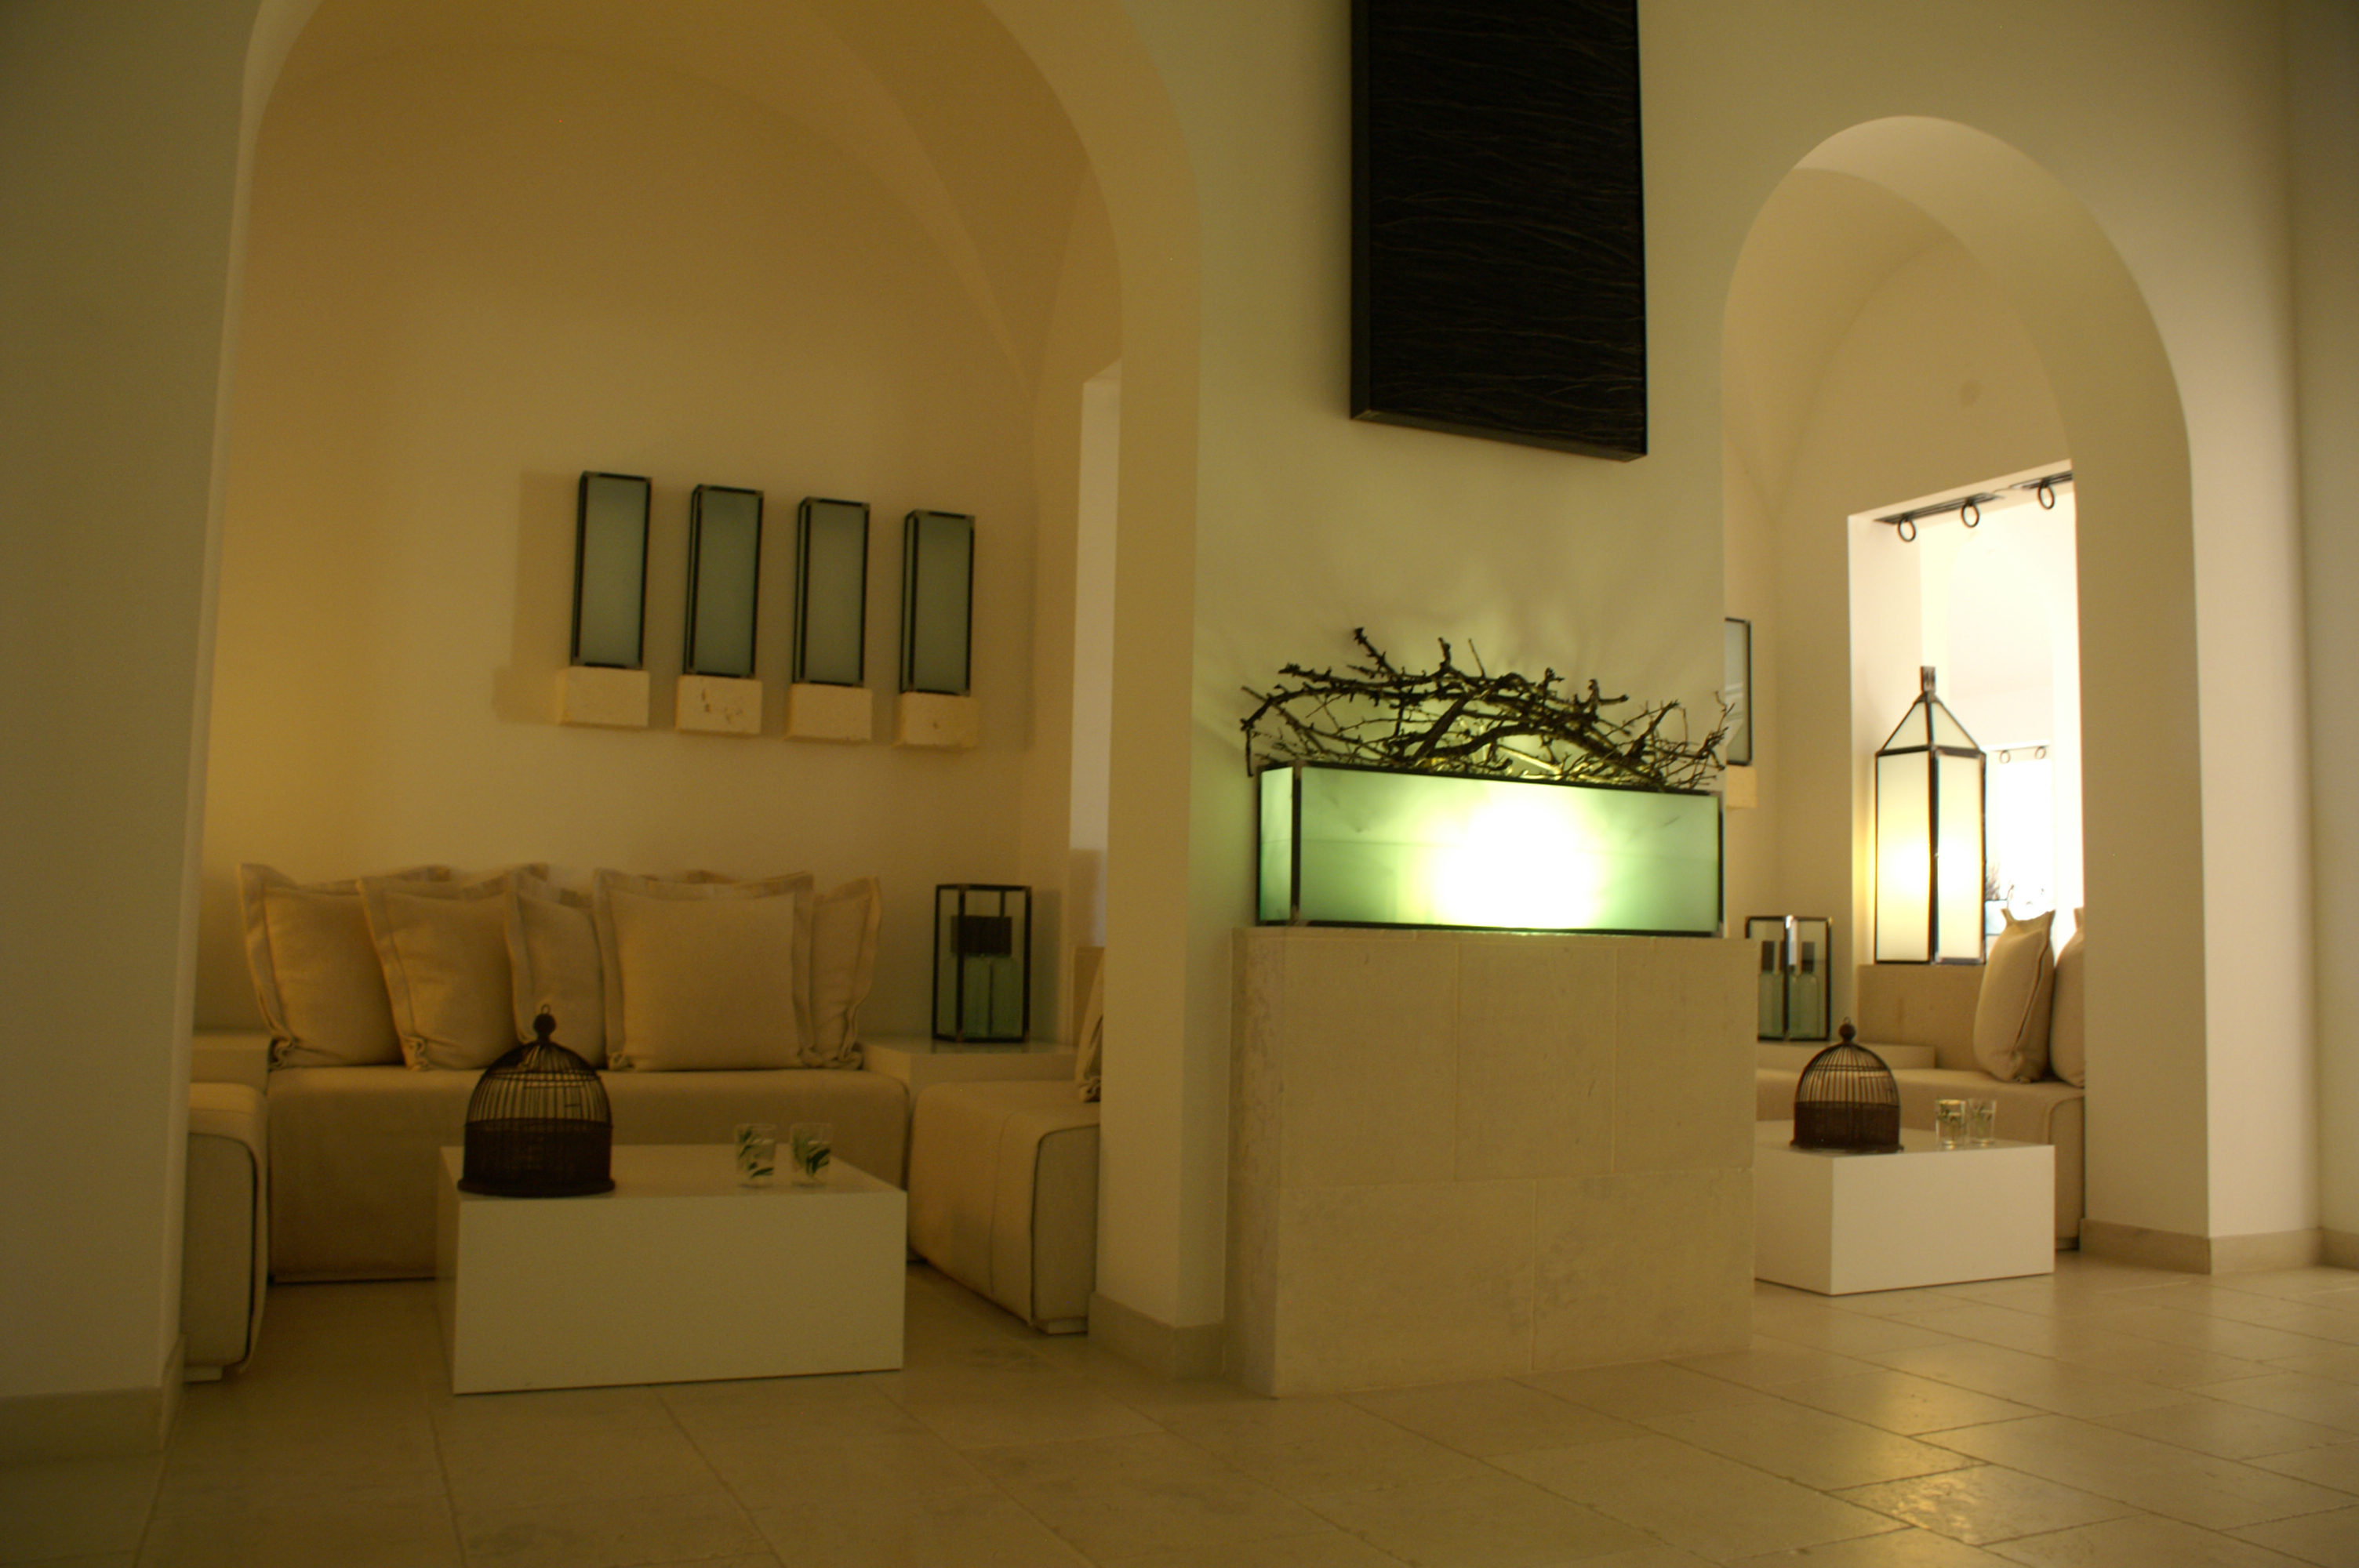 Couch, cushions and illumination decoration at Borgo Egnazia Resort Hotel in Puglia, Italy